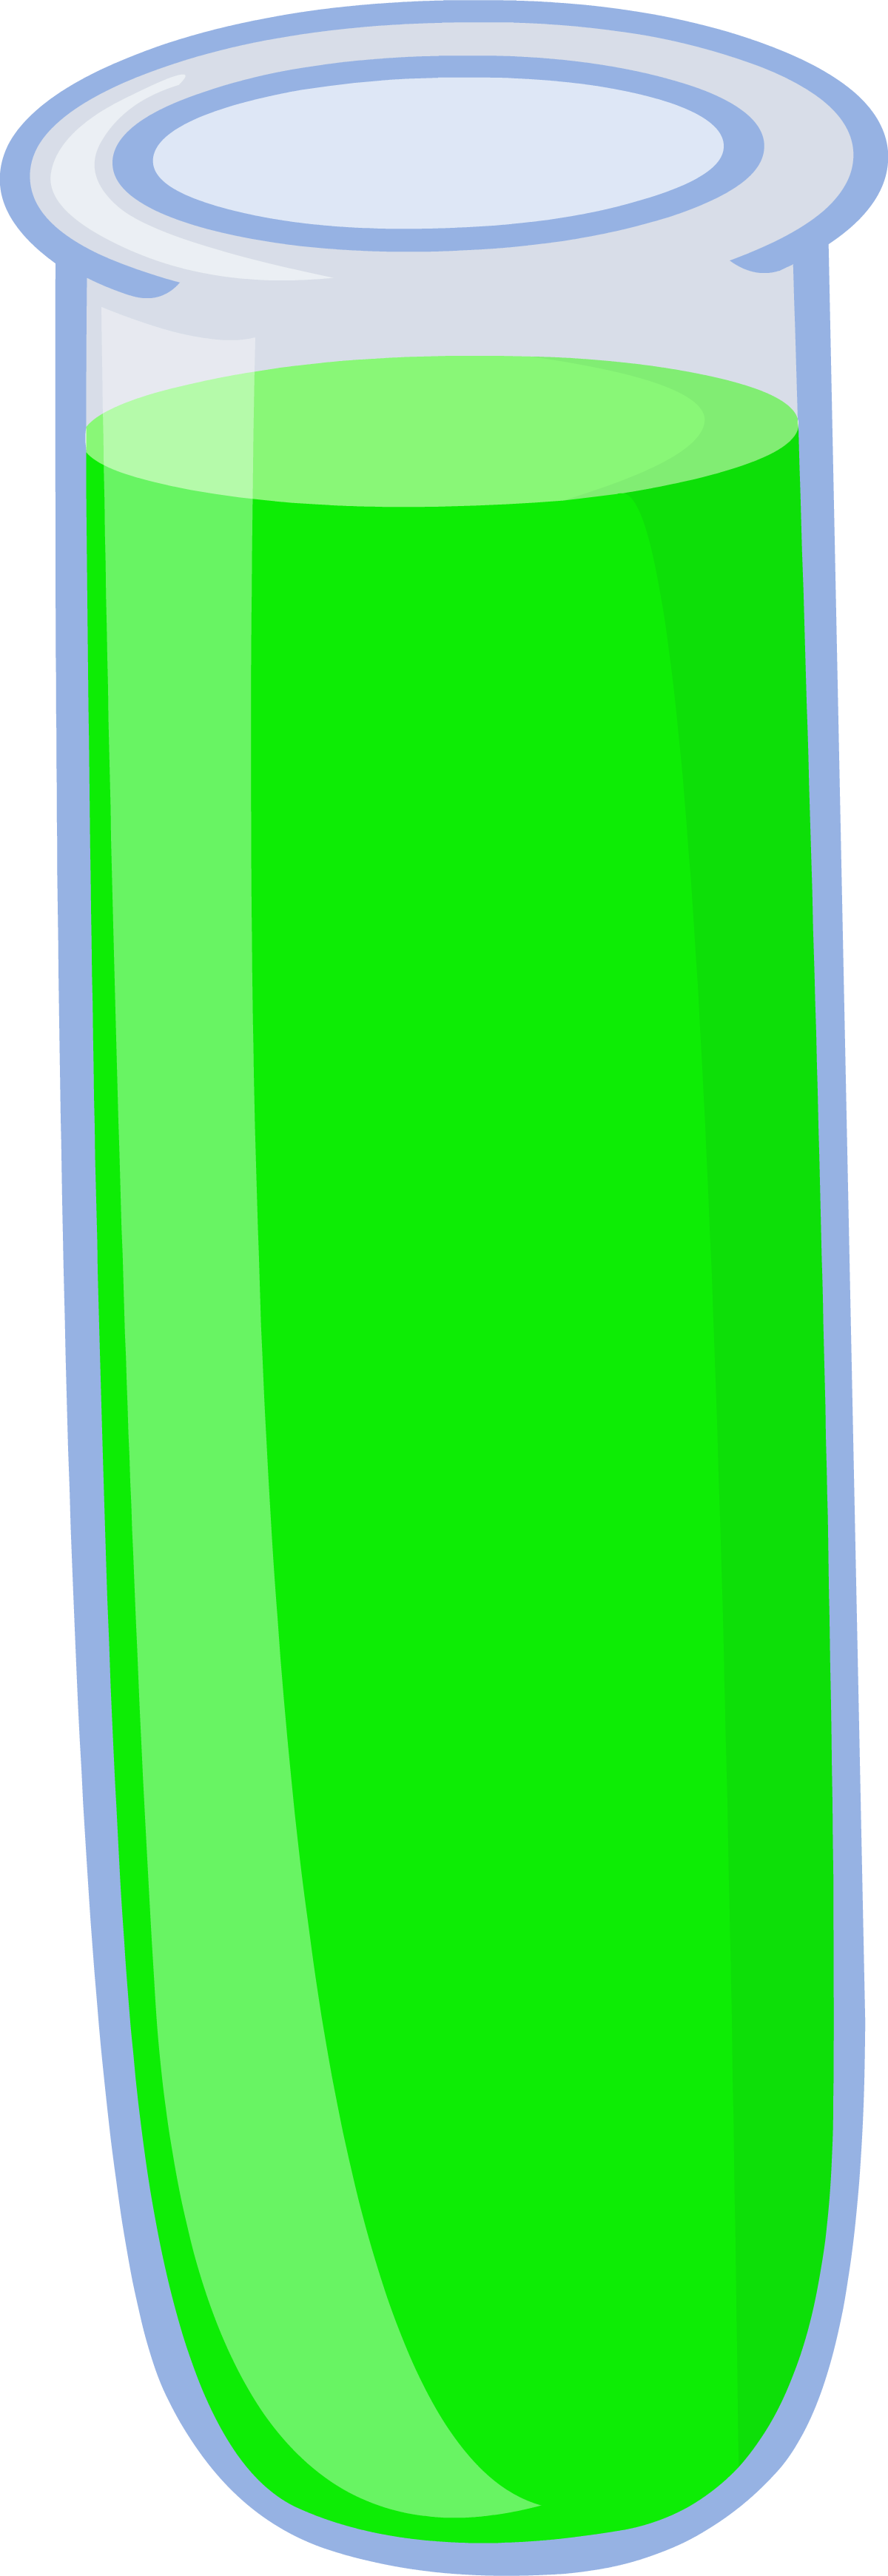 Green clipart test tube, Green test tube Transparent FREE